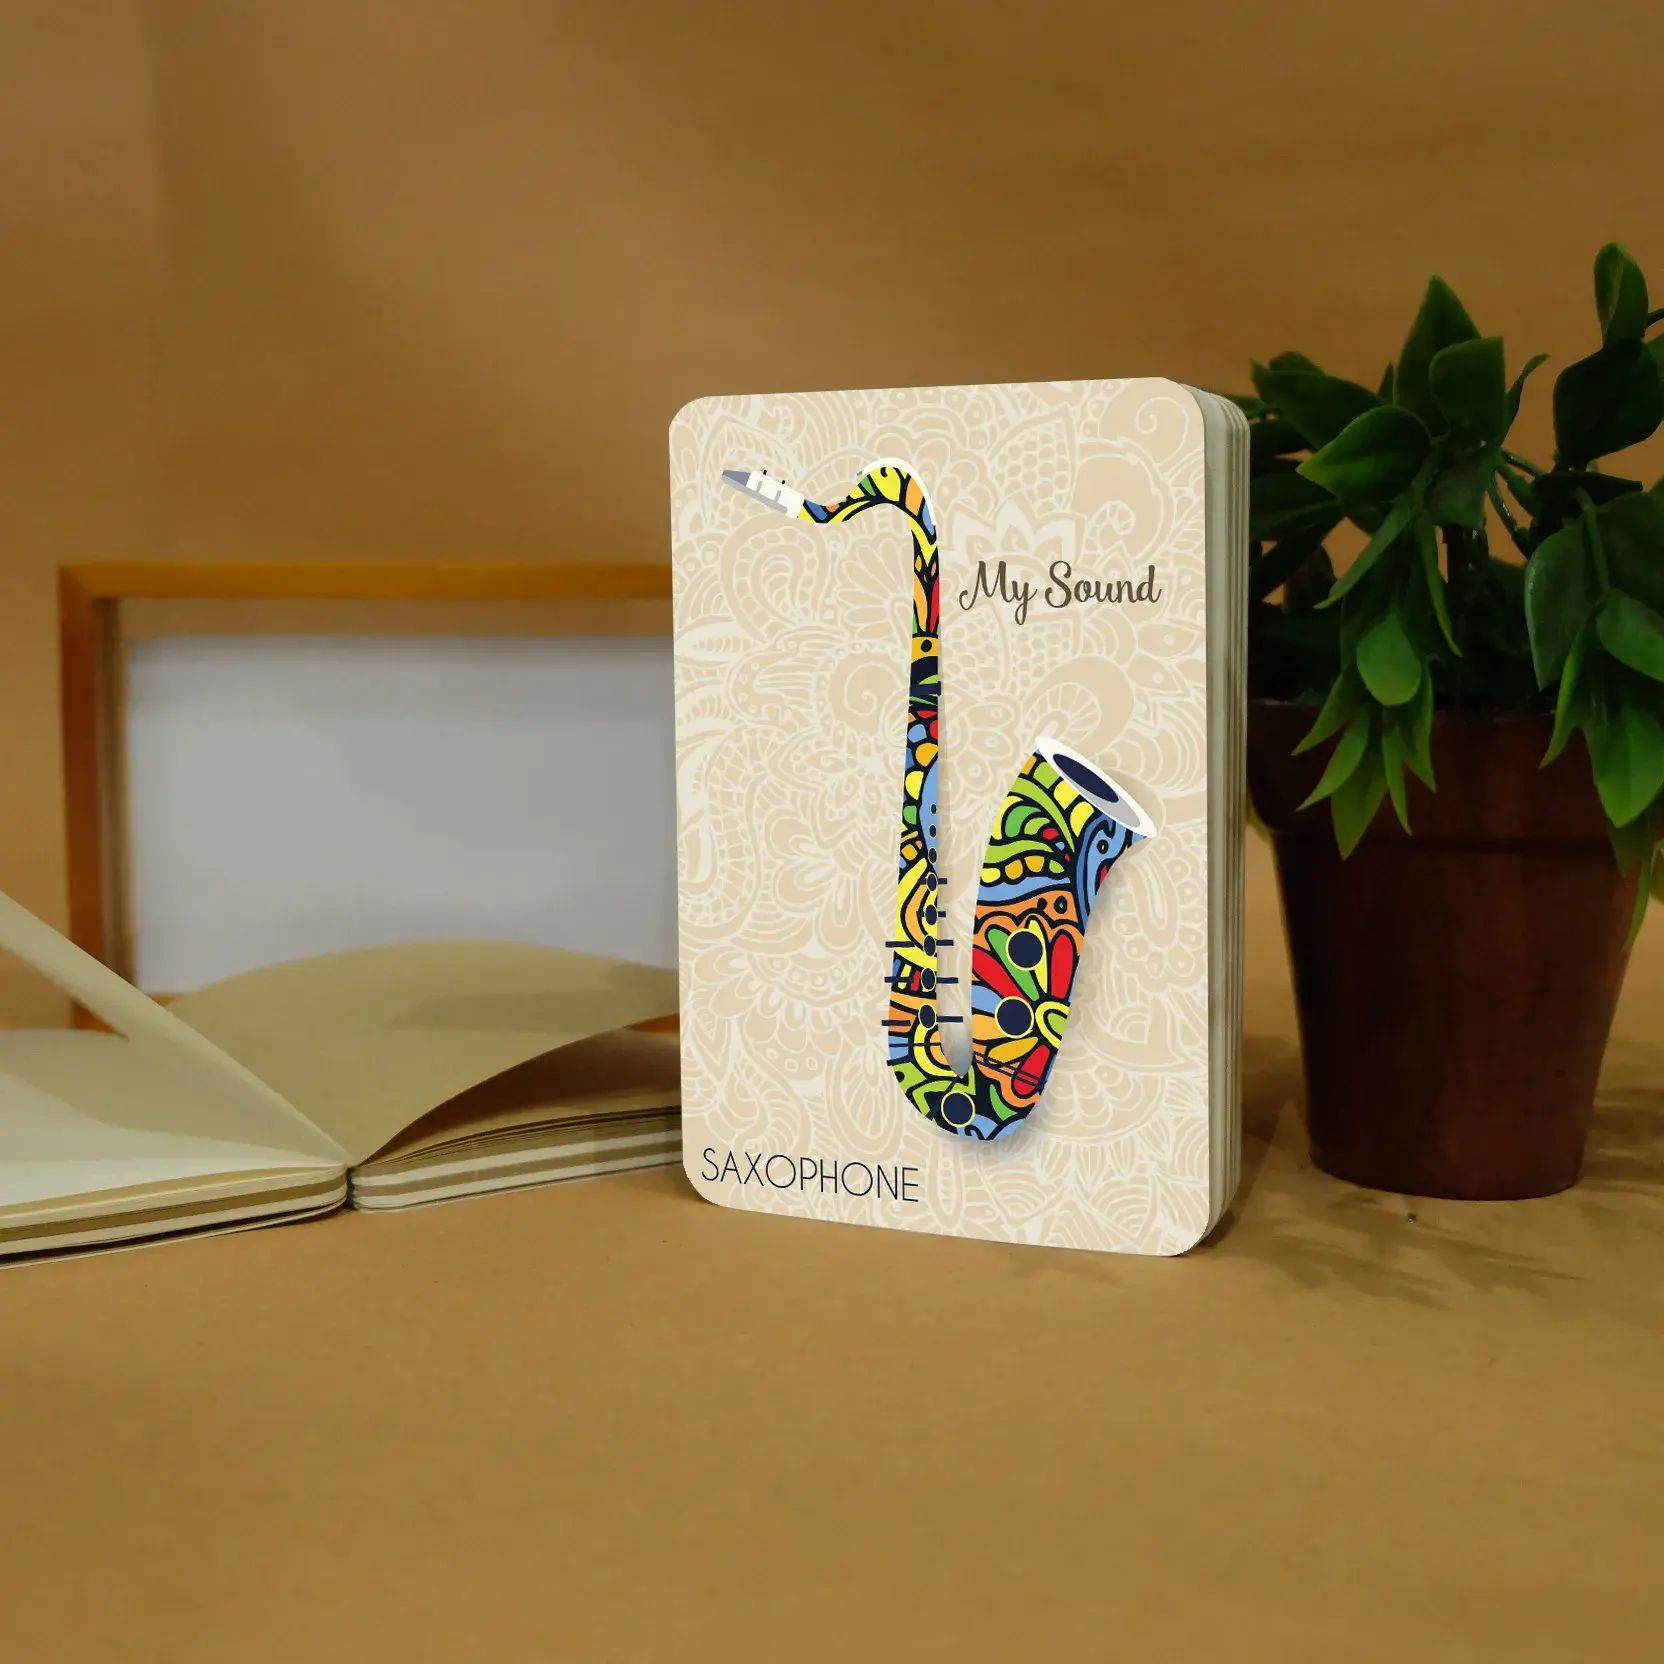 Jurnal Premium : My Sound : Saxophone (GAPJP50)